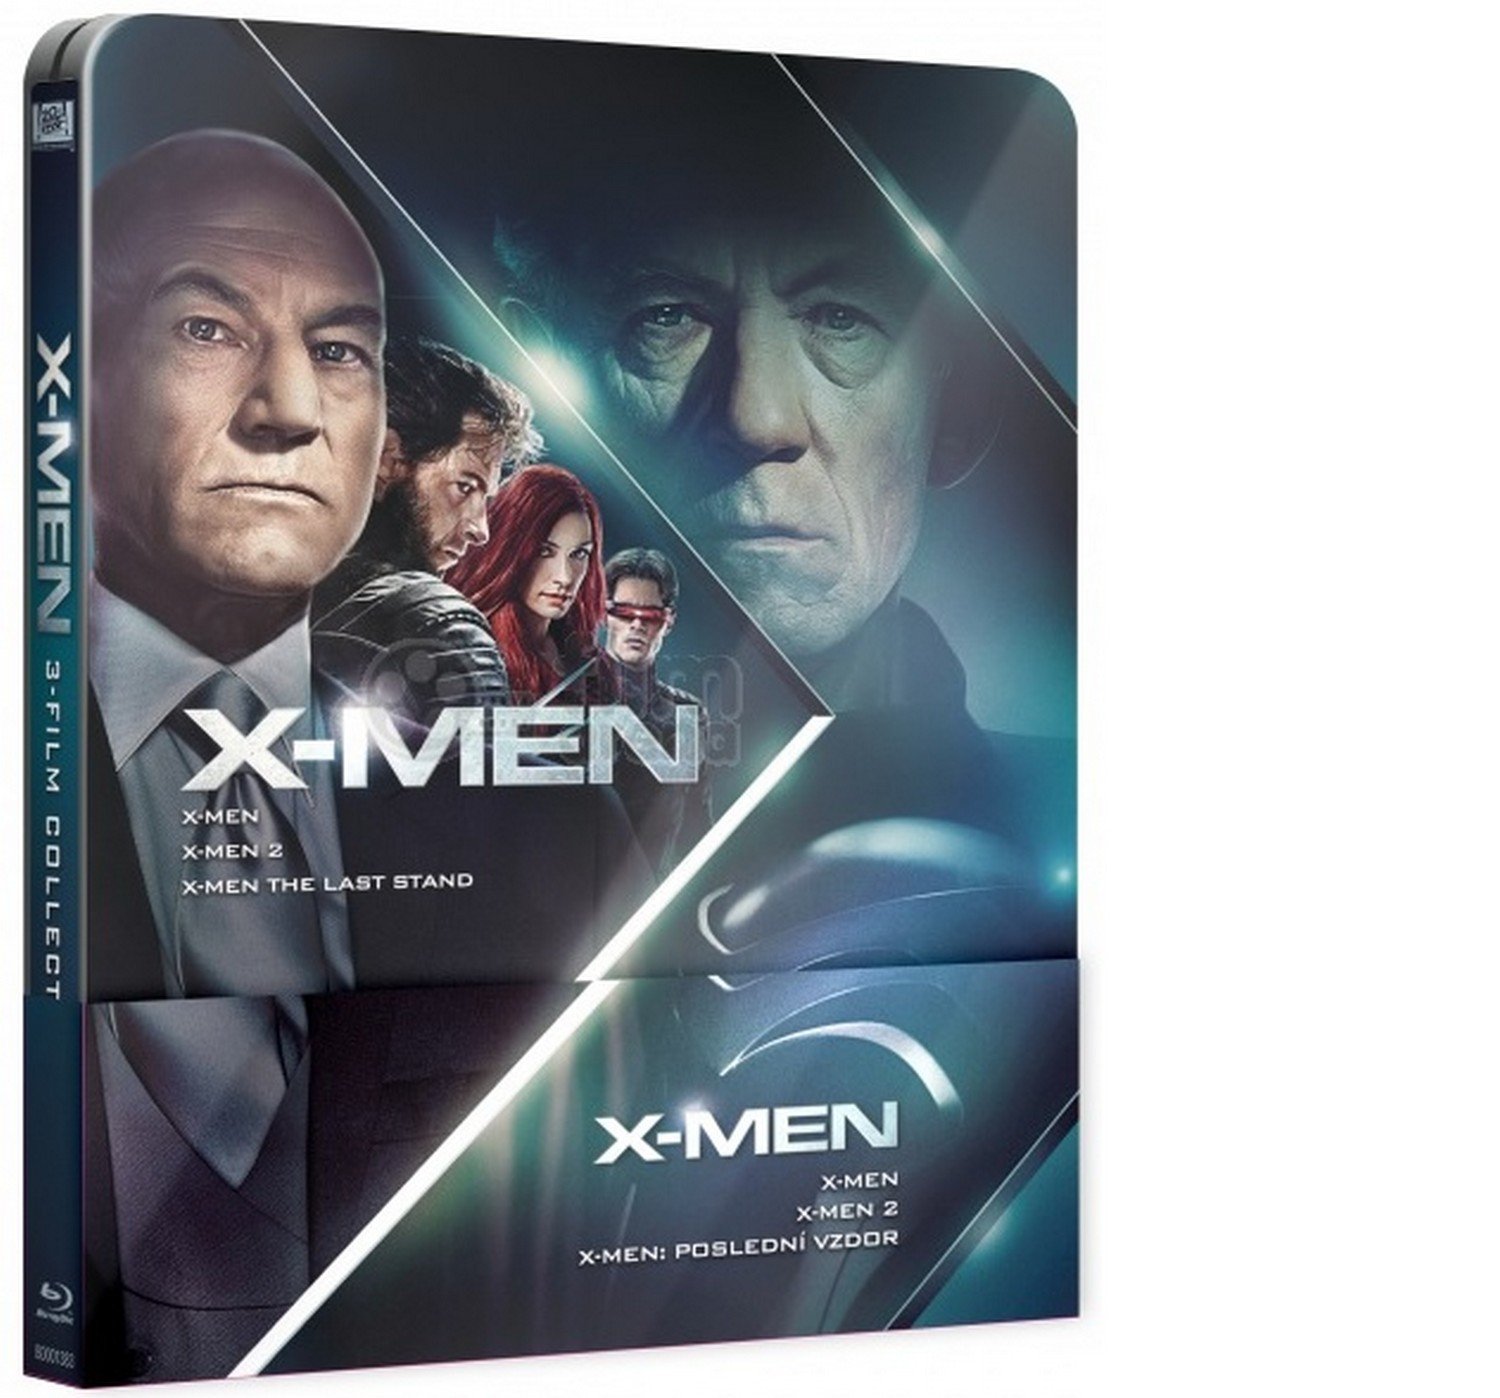 x-men-trilogy-x-men-x-men-united-the-last-stand-steelbook-3-disc-box-set